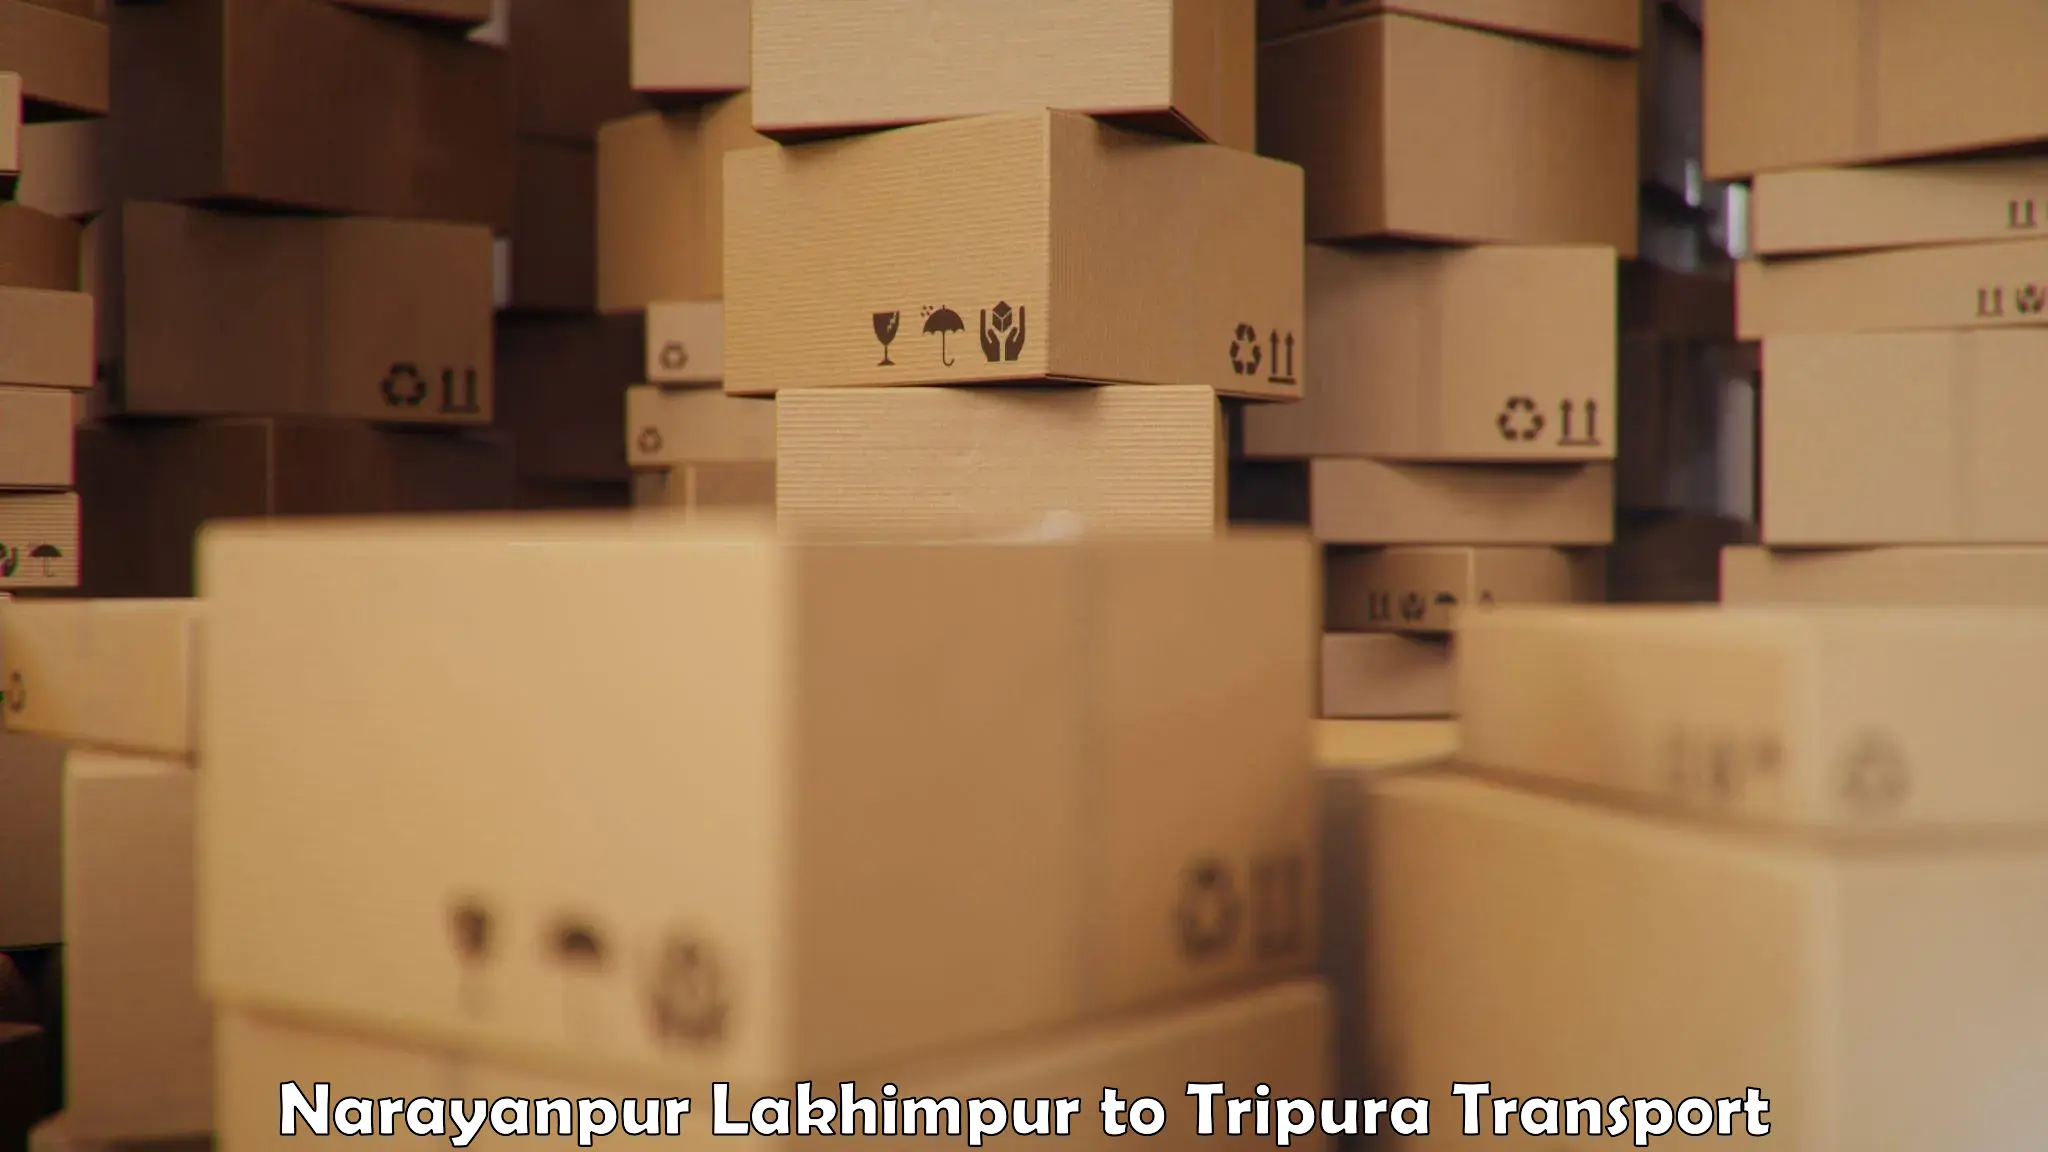 Shipping partner Narayanpur Lakhimpur to Kamalpur